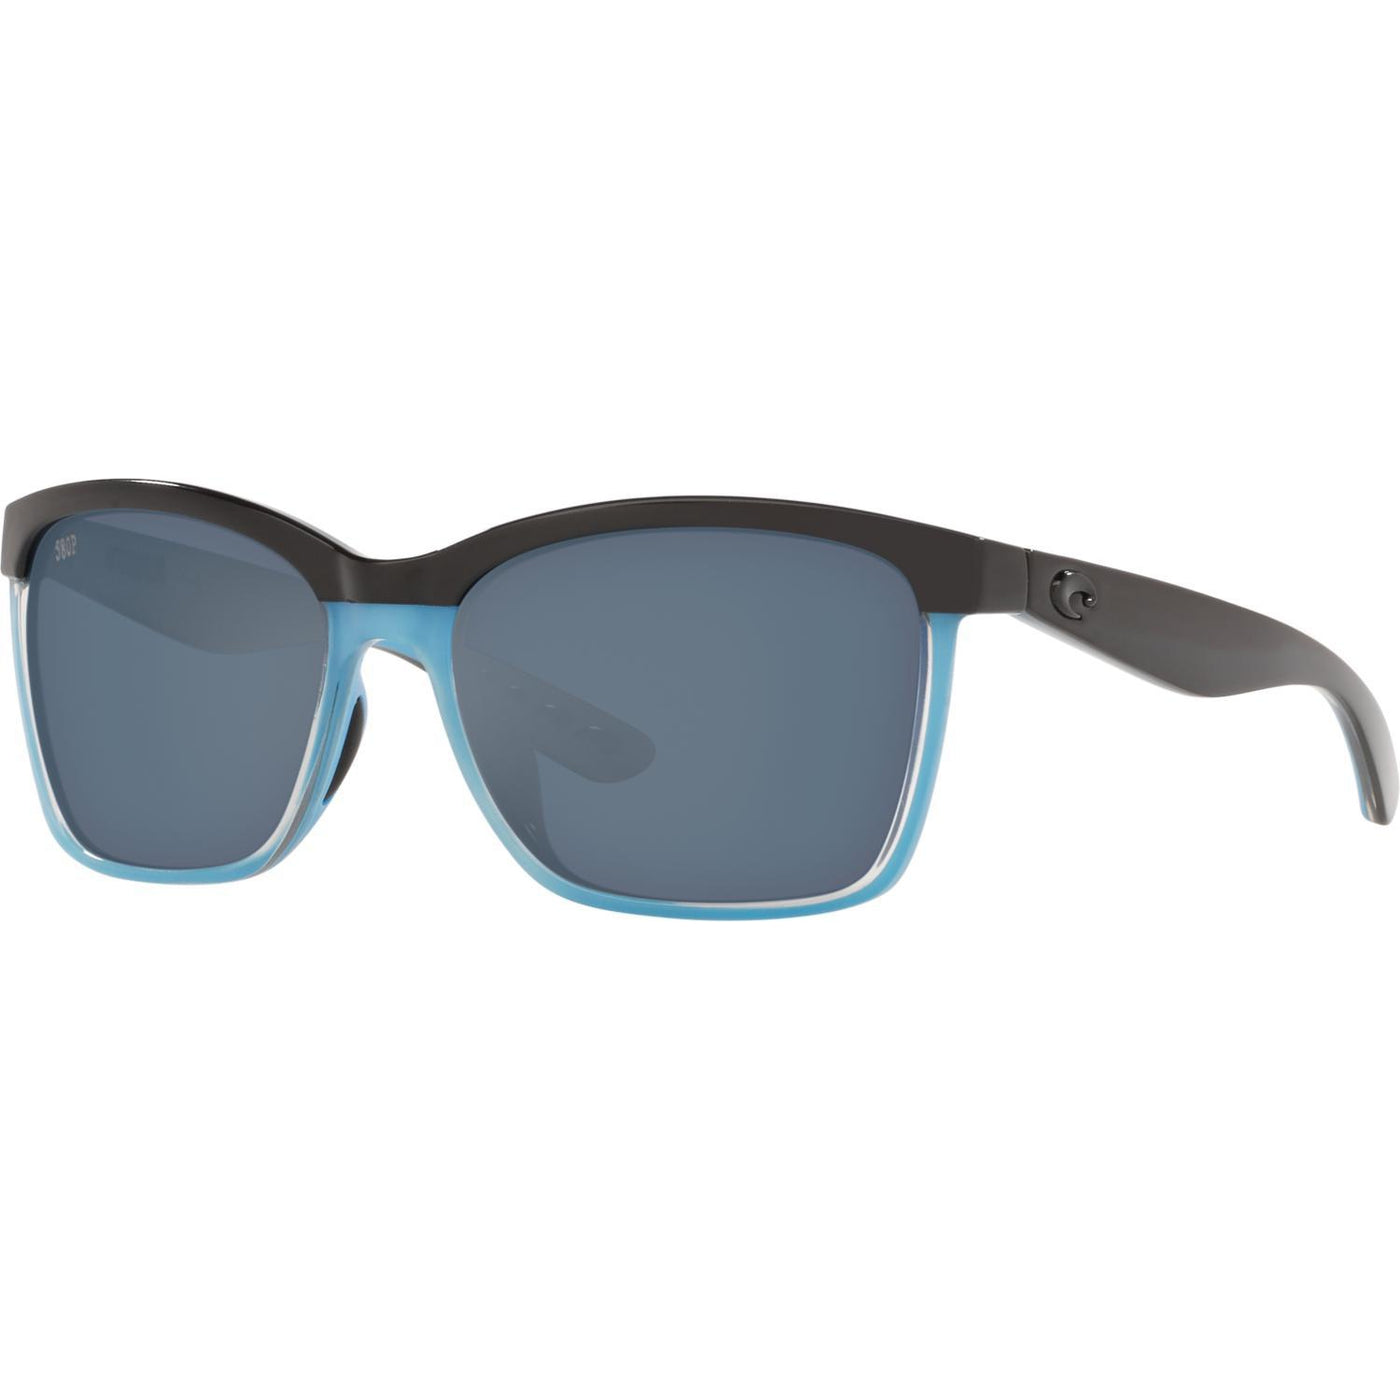 Costa "Anaa" Polarized Sunglasses-SUNGLASSES-Black/Light Blue-Gray 580P-Kevin's Fine Outdoor Gear & Apparel